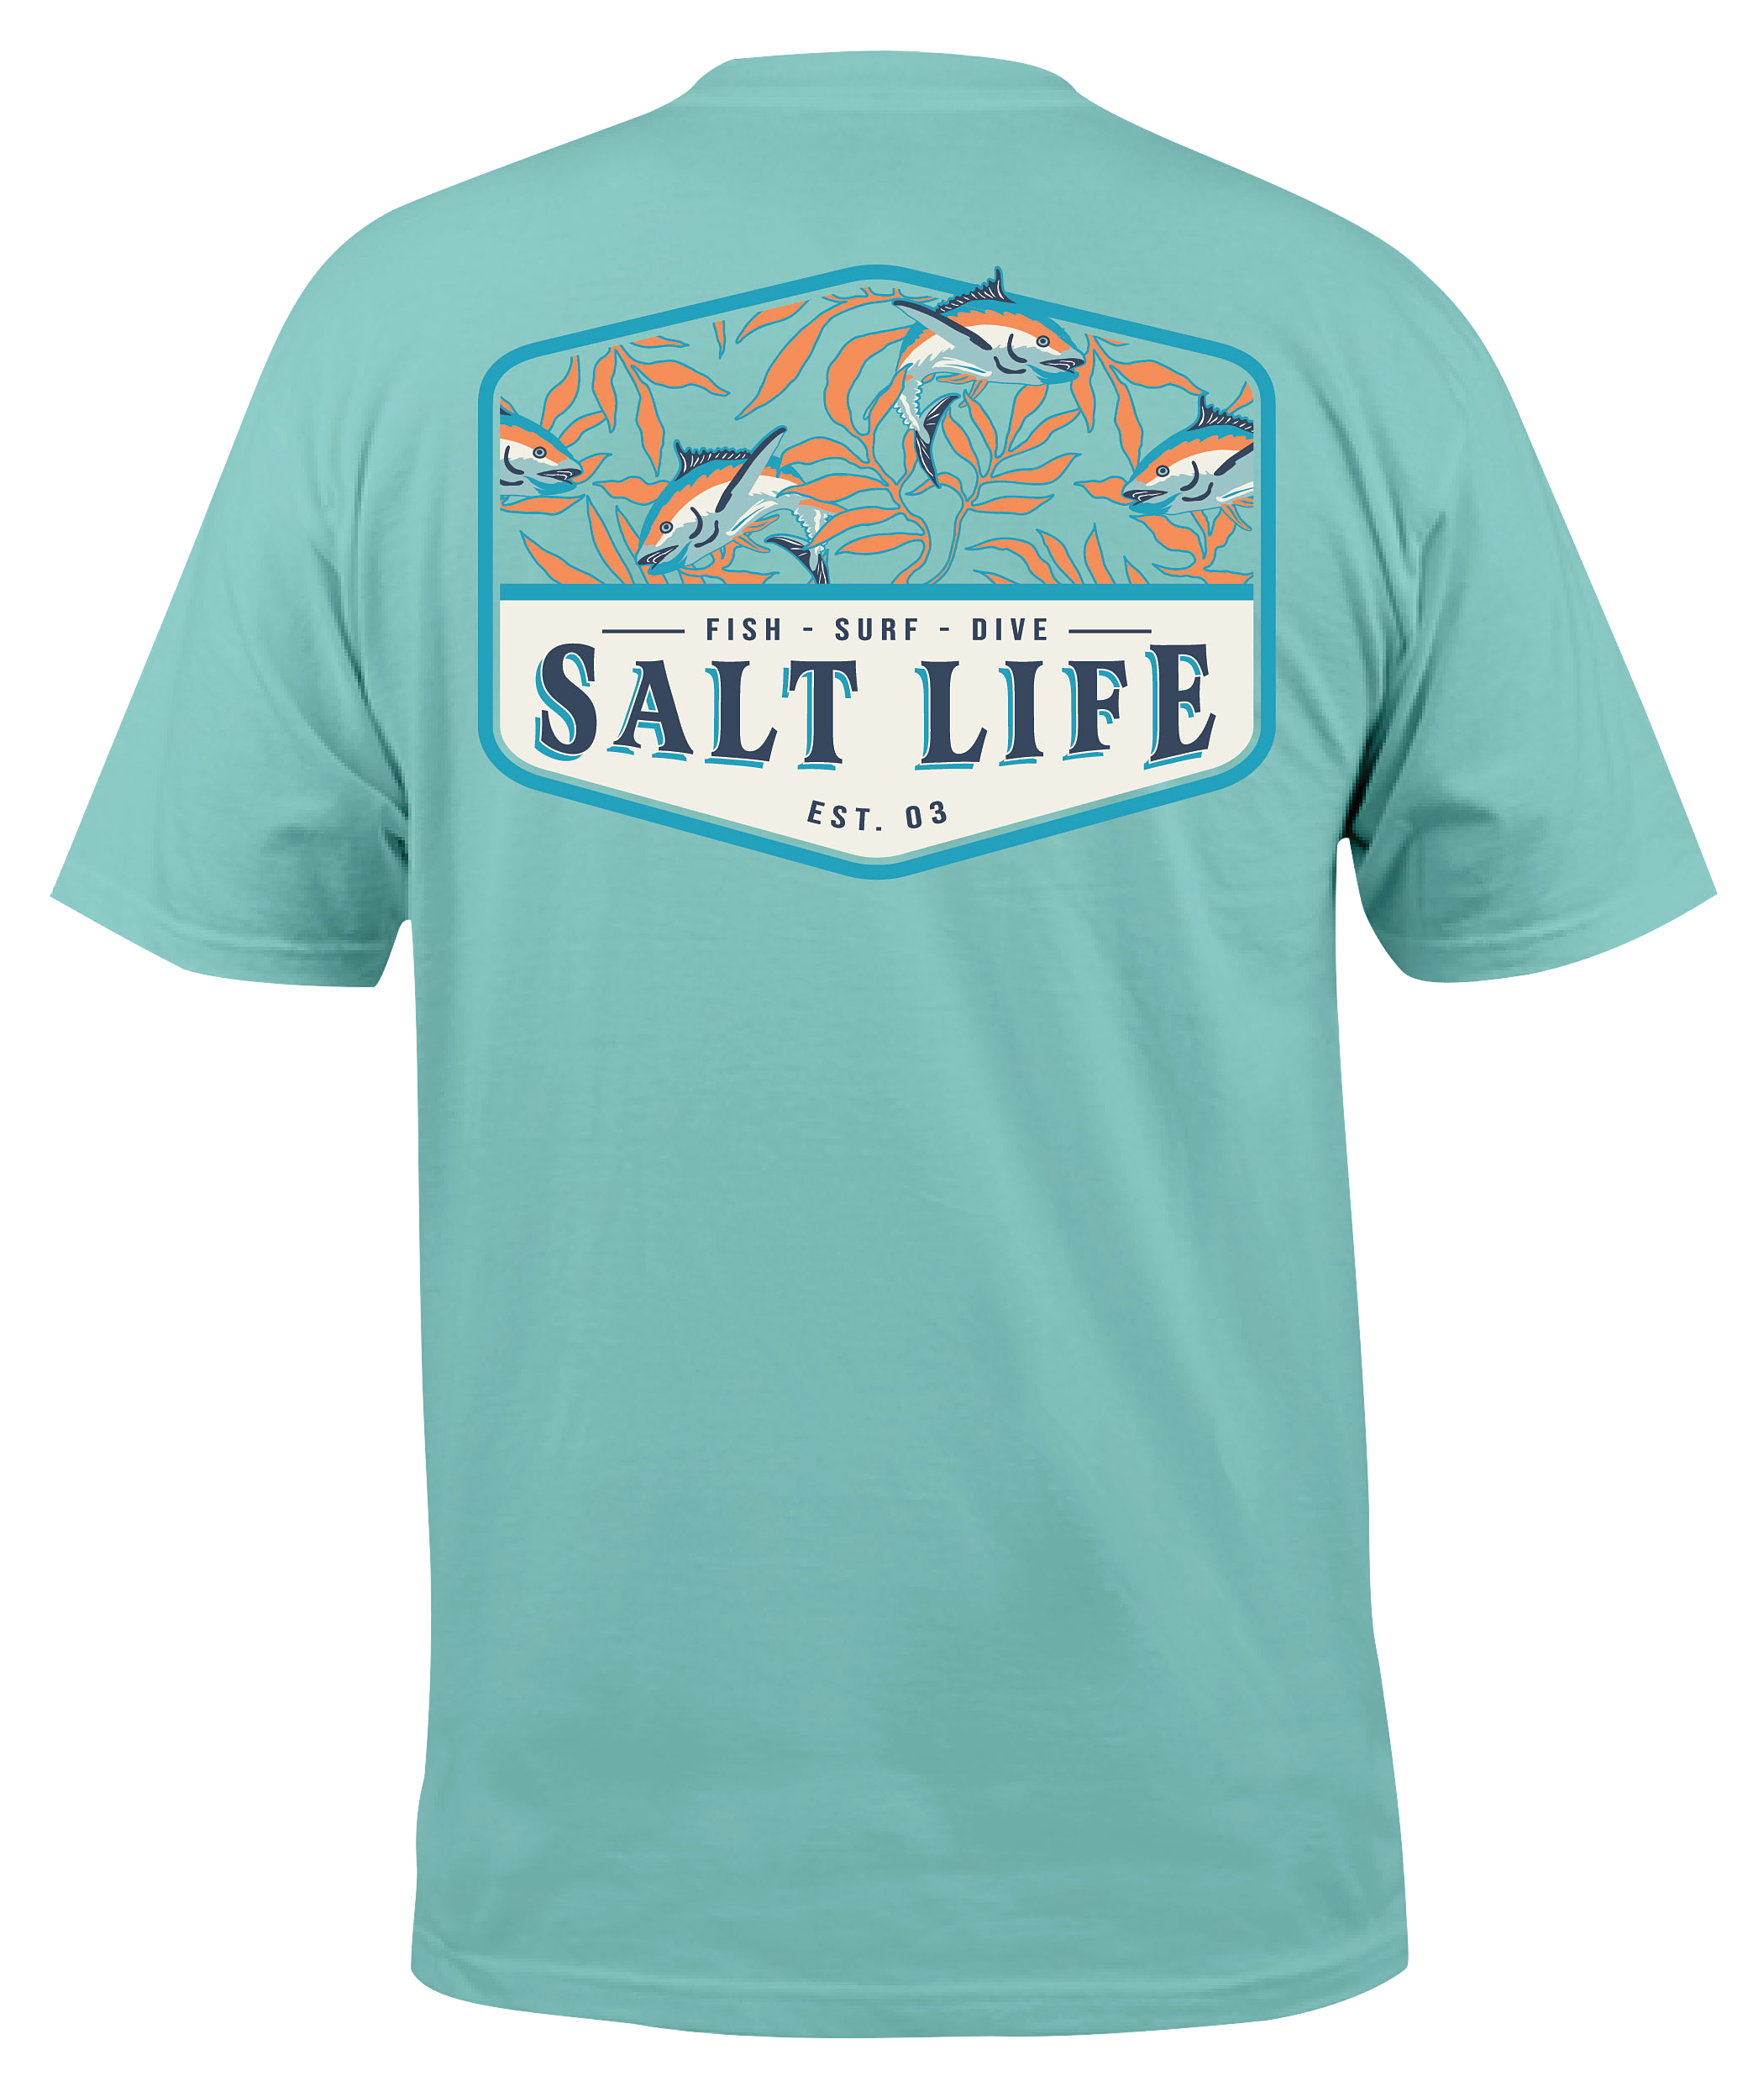 Salt Life, Fish Dive Surf